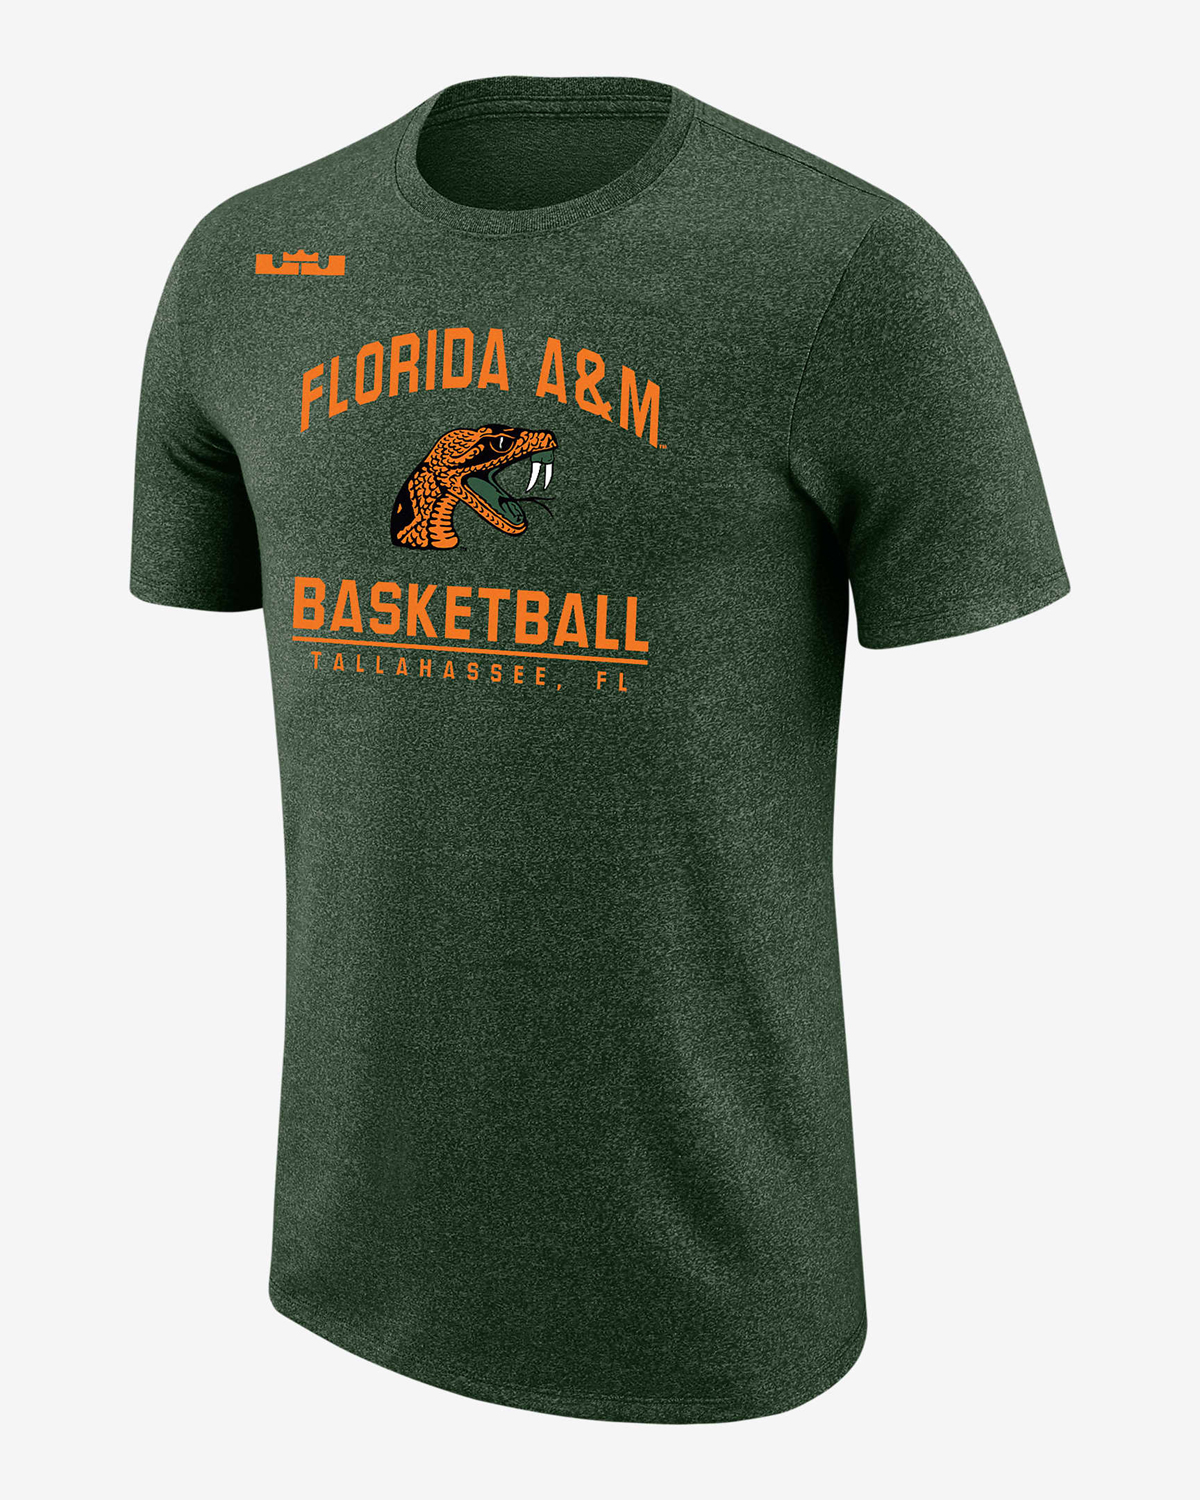 Nike-FAMU-Florida-AM-T-Shirt-Gorge-Green